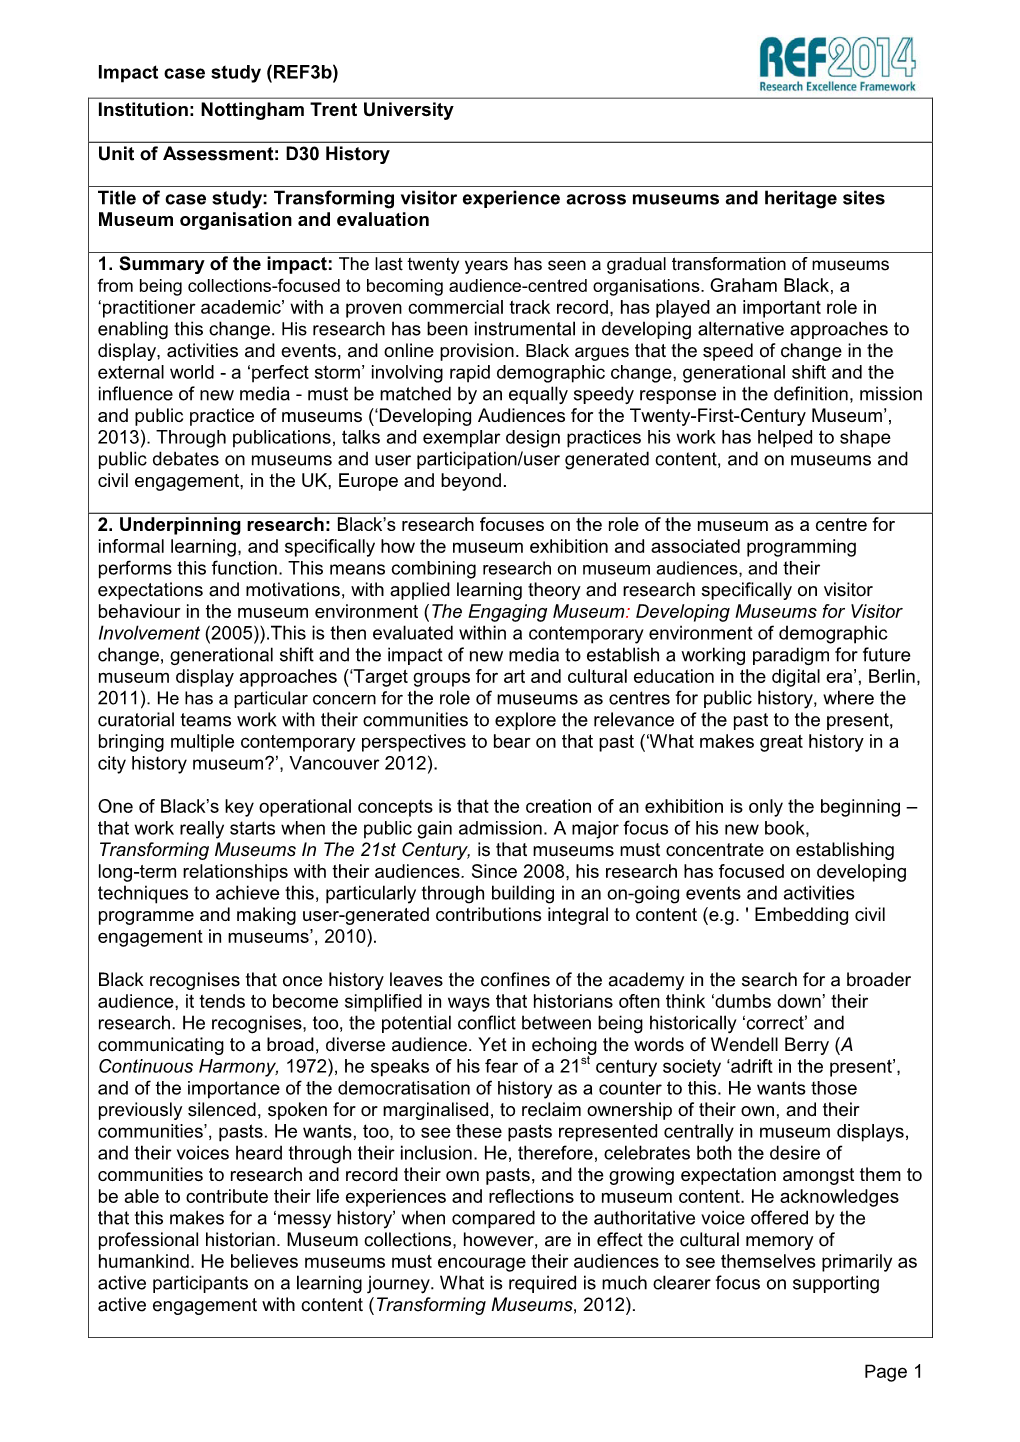 Impact Case Study (Ref3b) Page 1 Institution: Nottingham Trent University Unit of Assessment